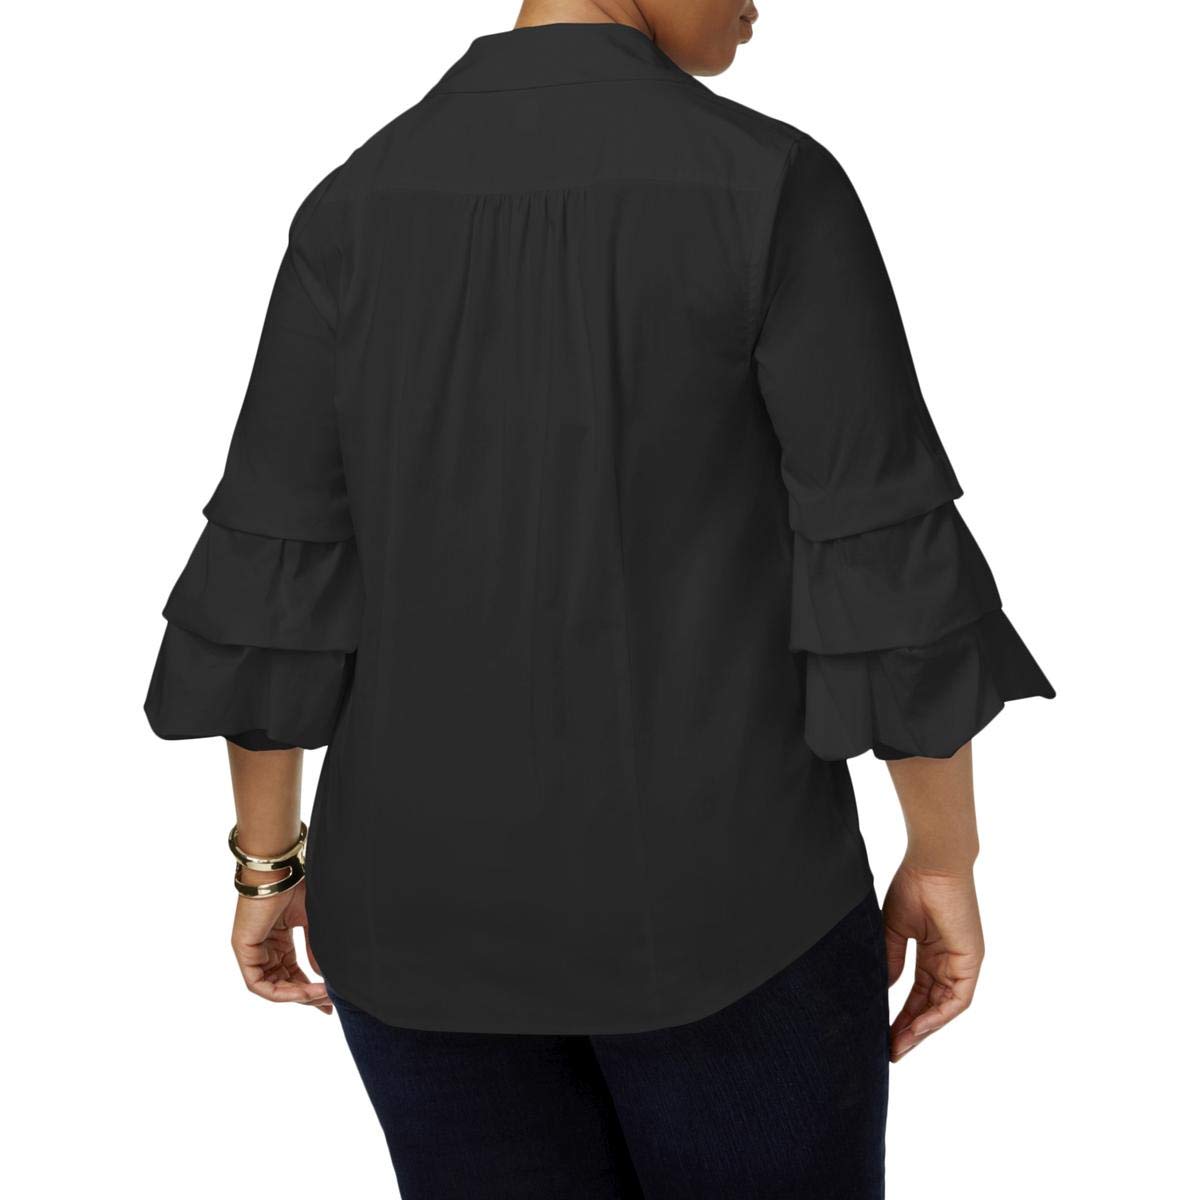 Inc International Concepts Womens Plus Size Ruffled-Sleeve Shirt